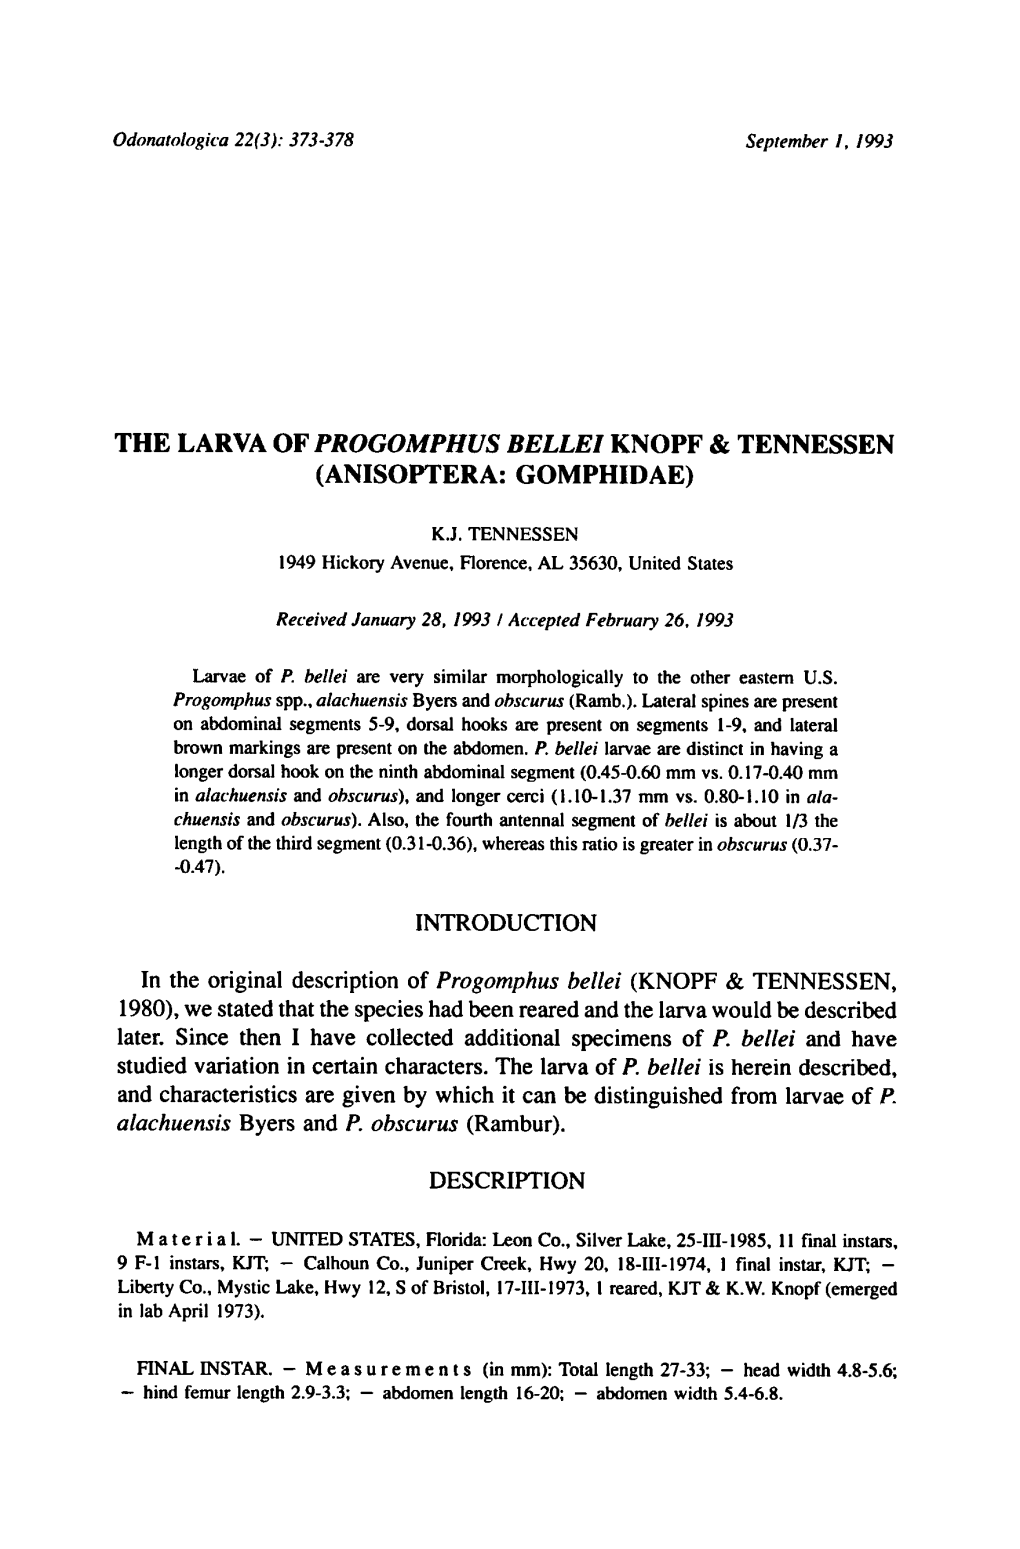 Original Description of Progomphus Bellei (KNOPF & TENNESSEN